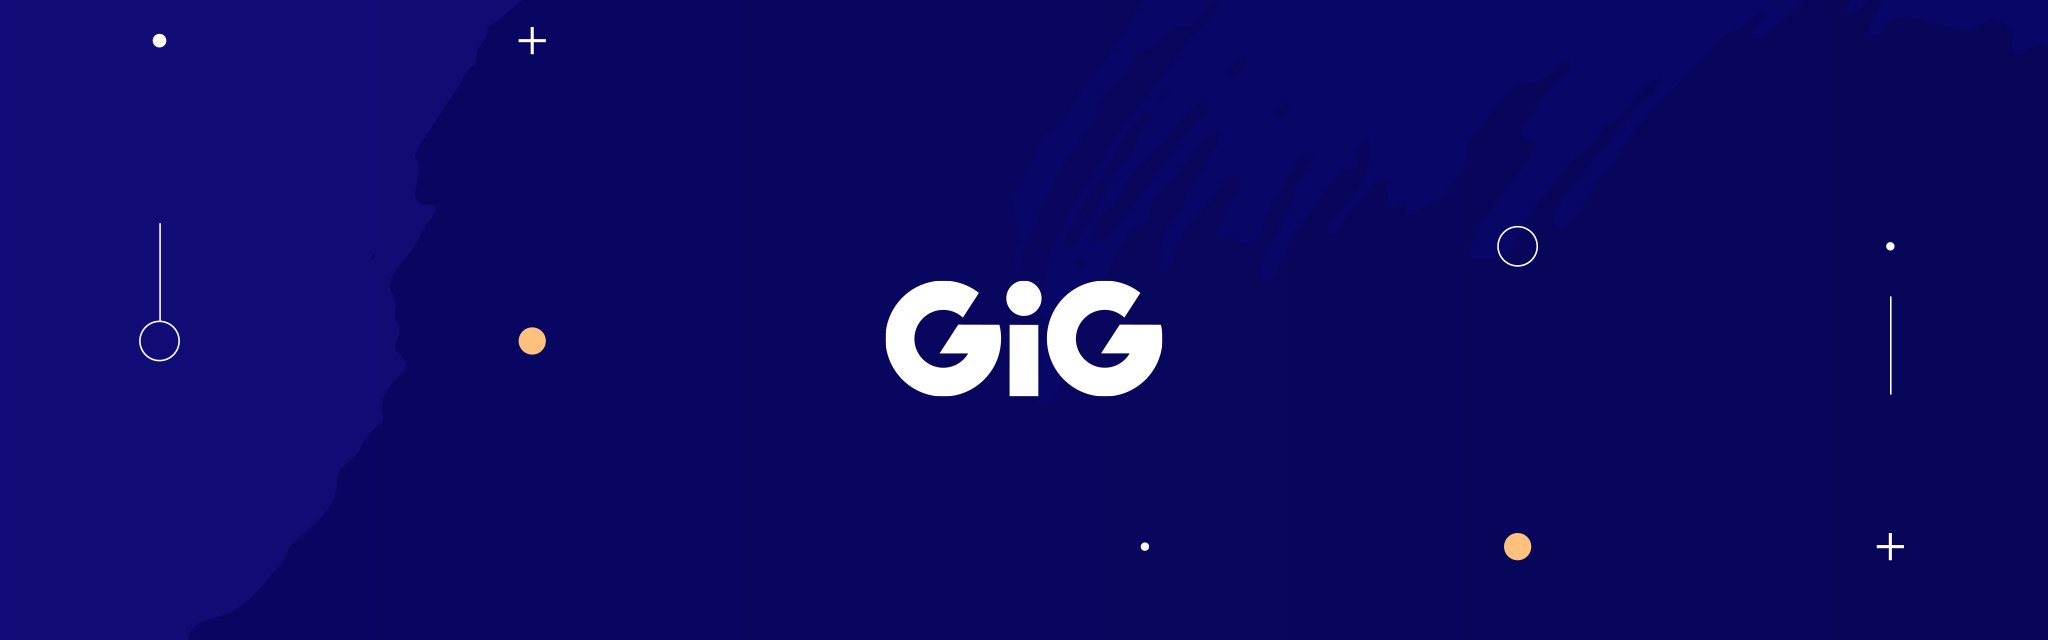 GiG Q4 financial results